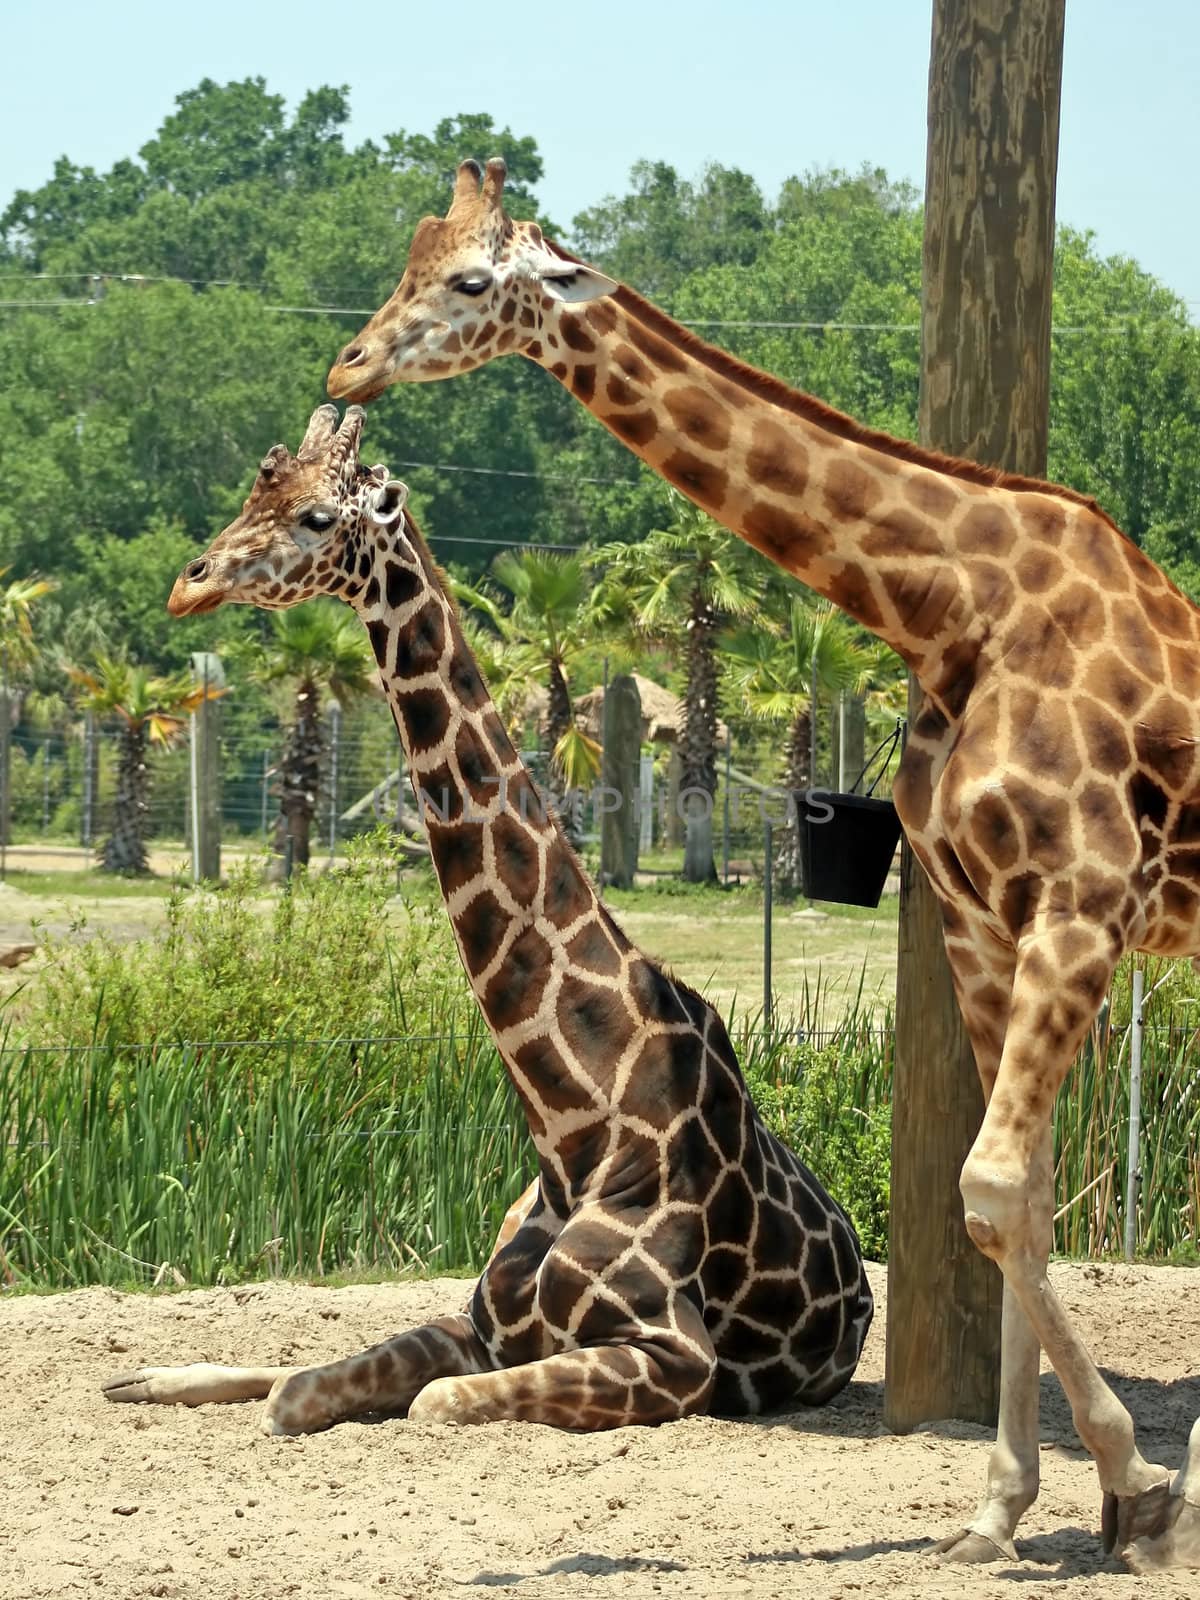 Two Giraffes in a large safari park